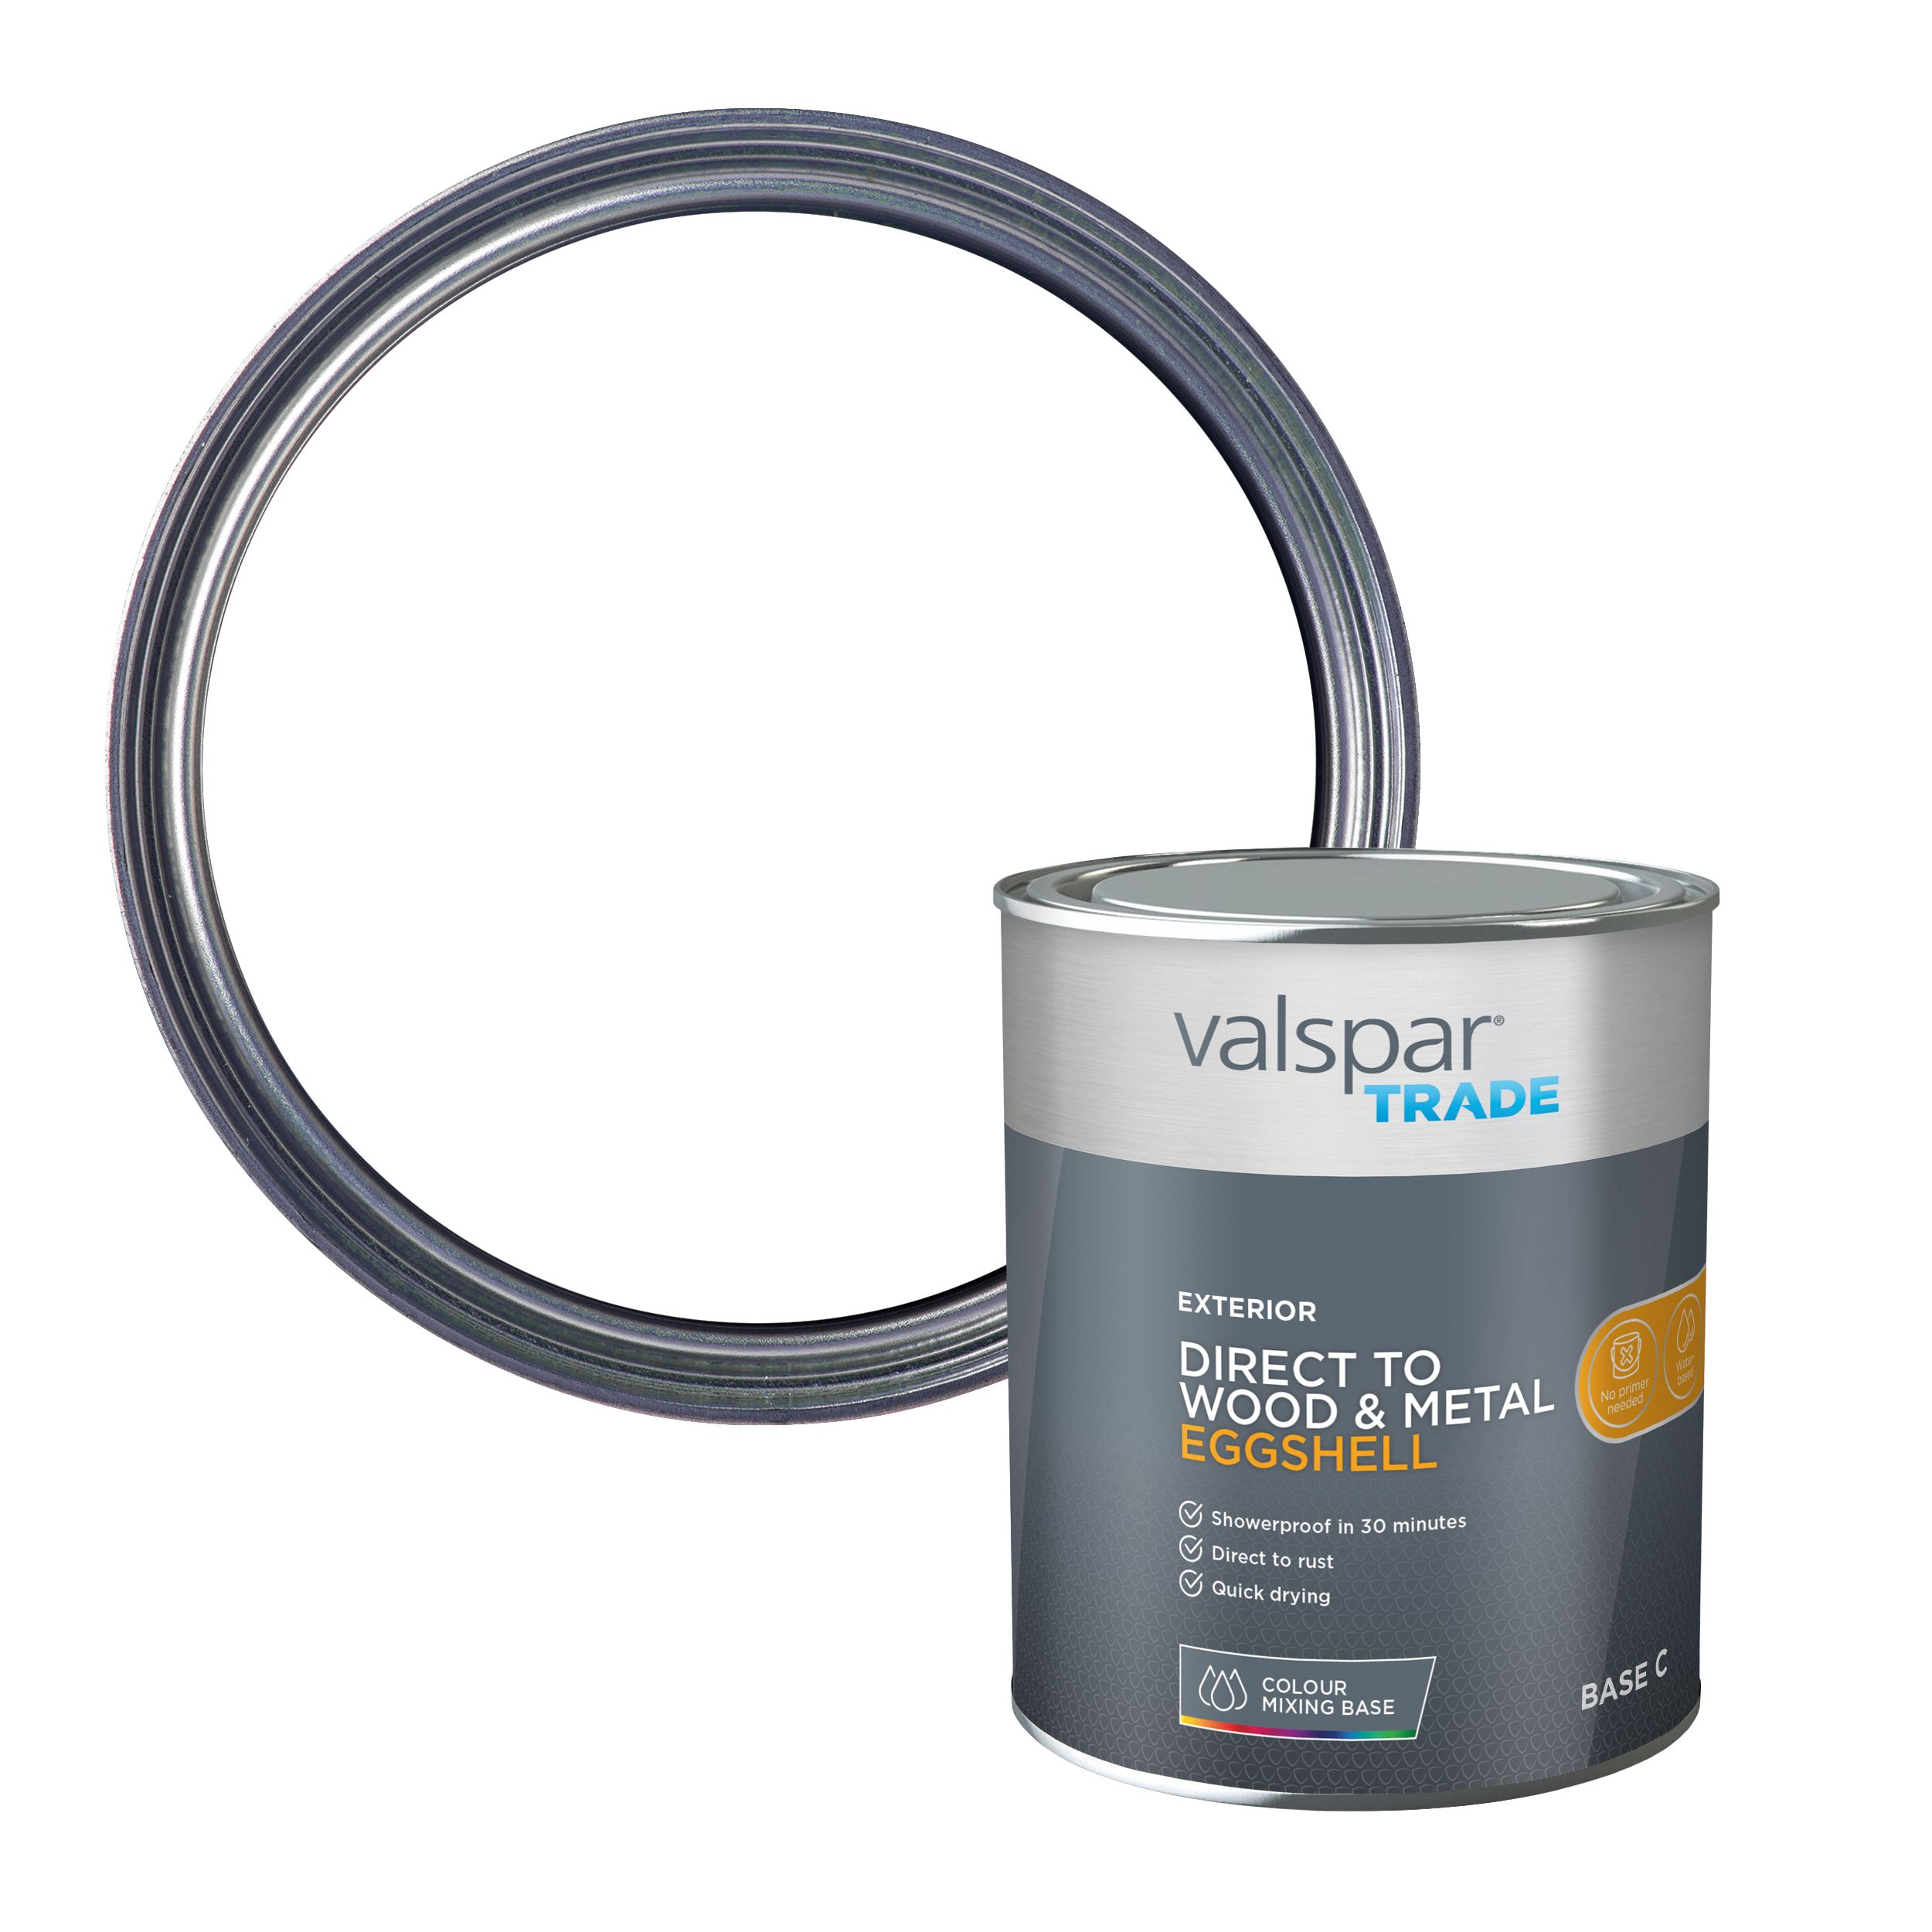 Valspar Trade Exterior Direct to Wood & Metal Eggshell Paint, Base 4, Base 4, 1L